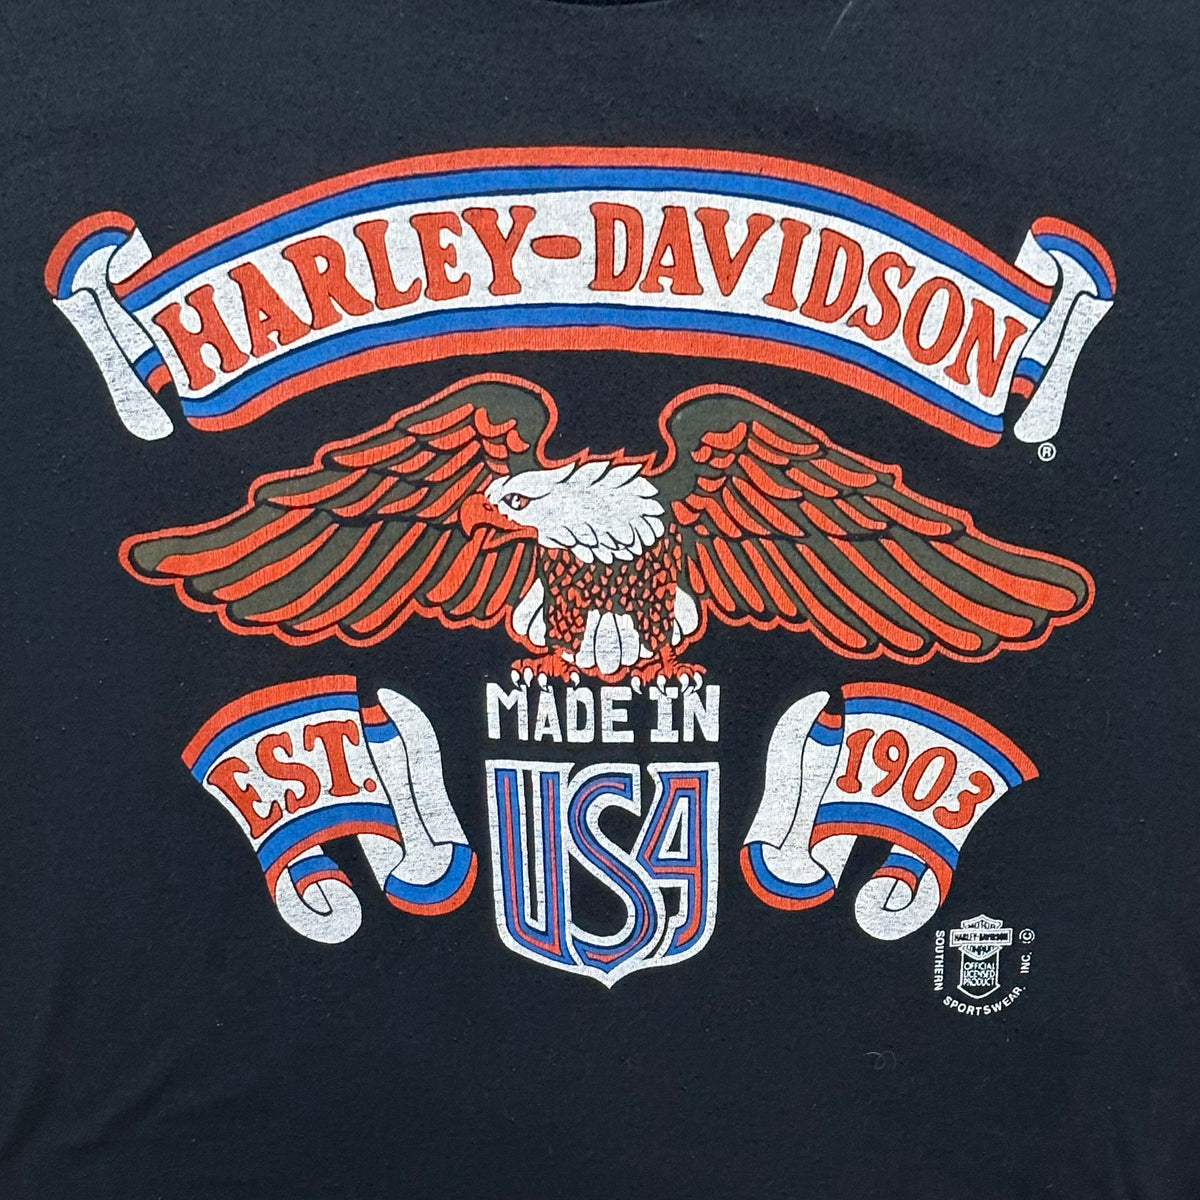 1970s Vintage Harley Davidson West Palm Beach Motorcycle Shirt